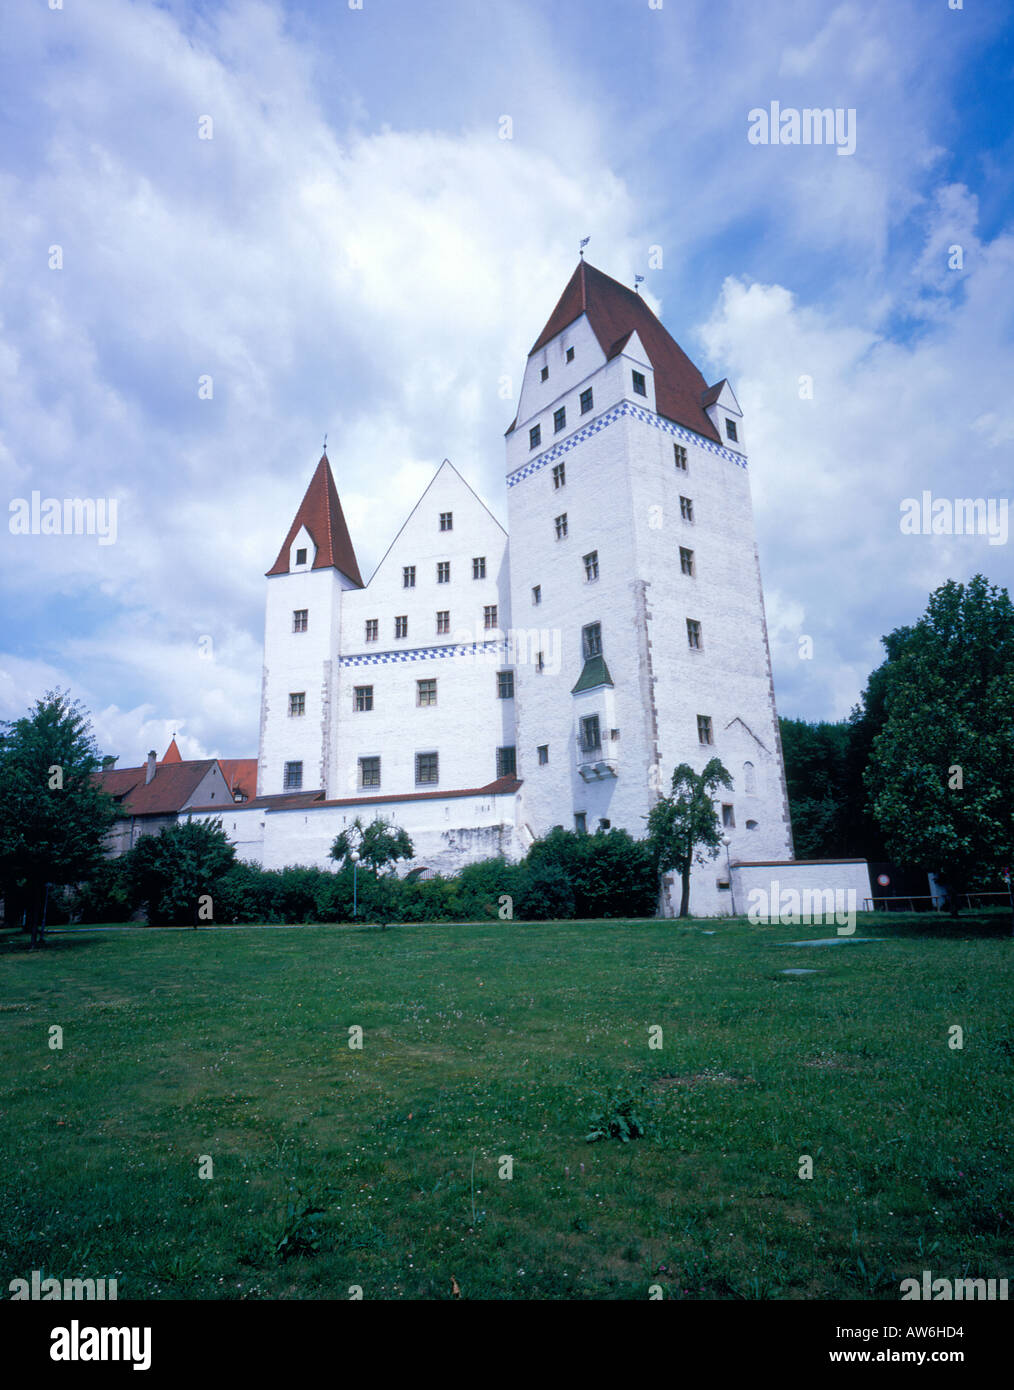 new castle Ingolstadt, Bavaria, Germany, Europe. Photo by Willy Matheisl Stock Photo